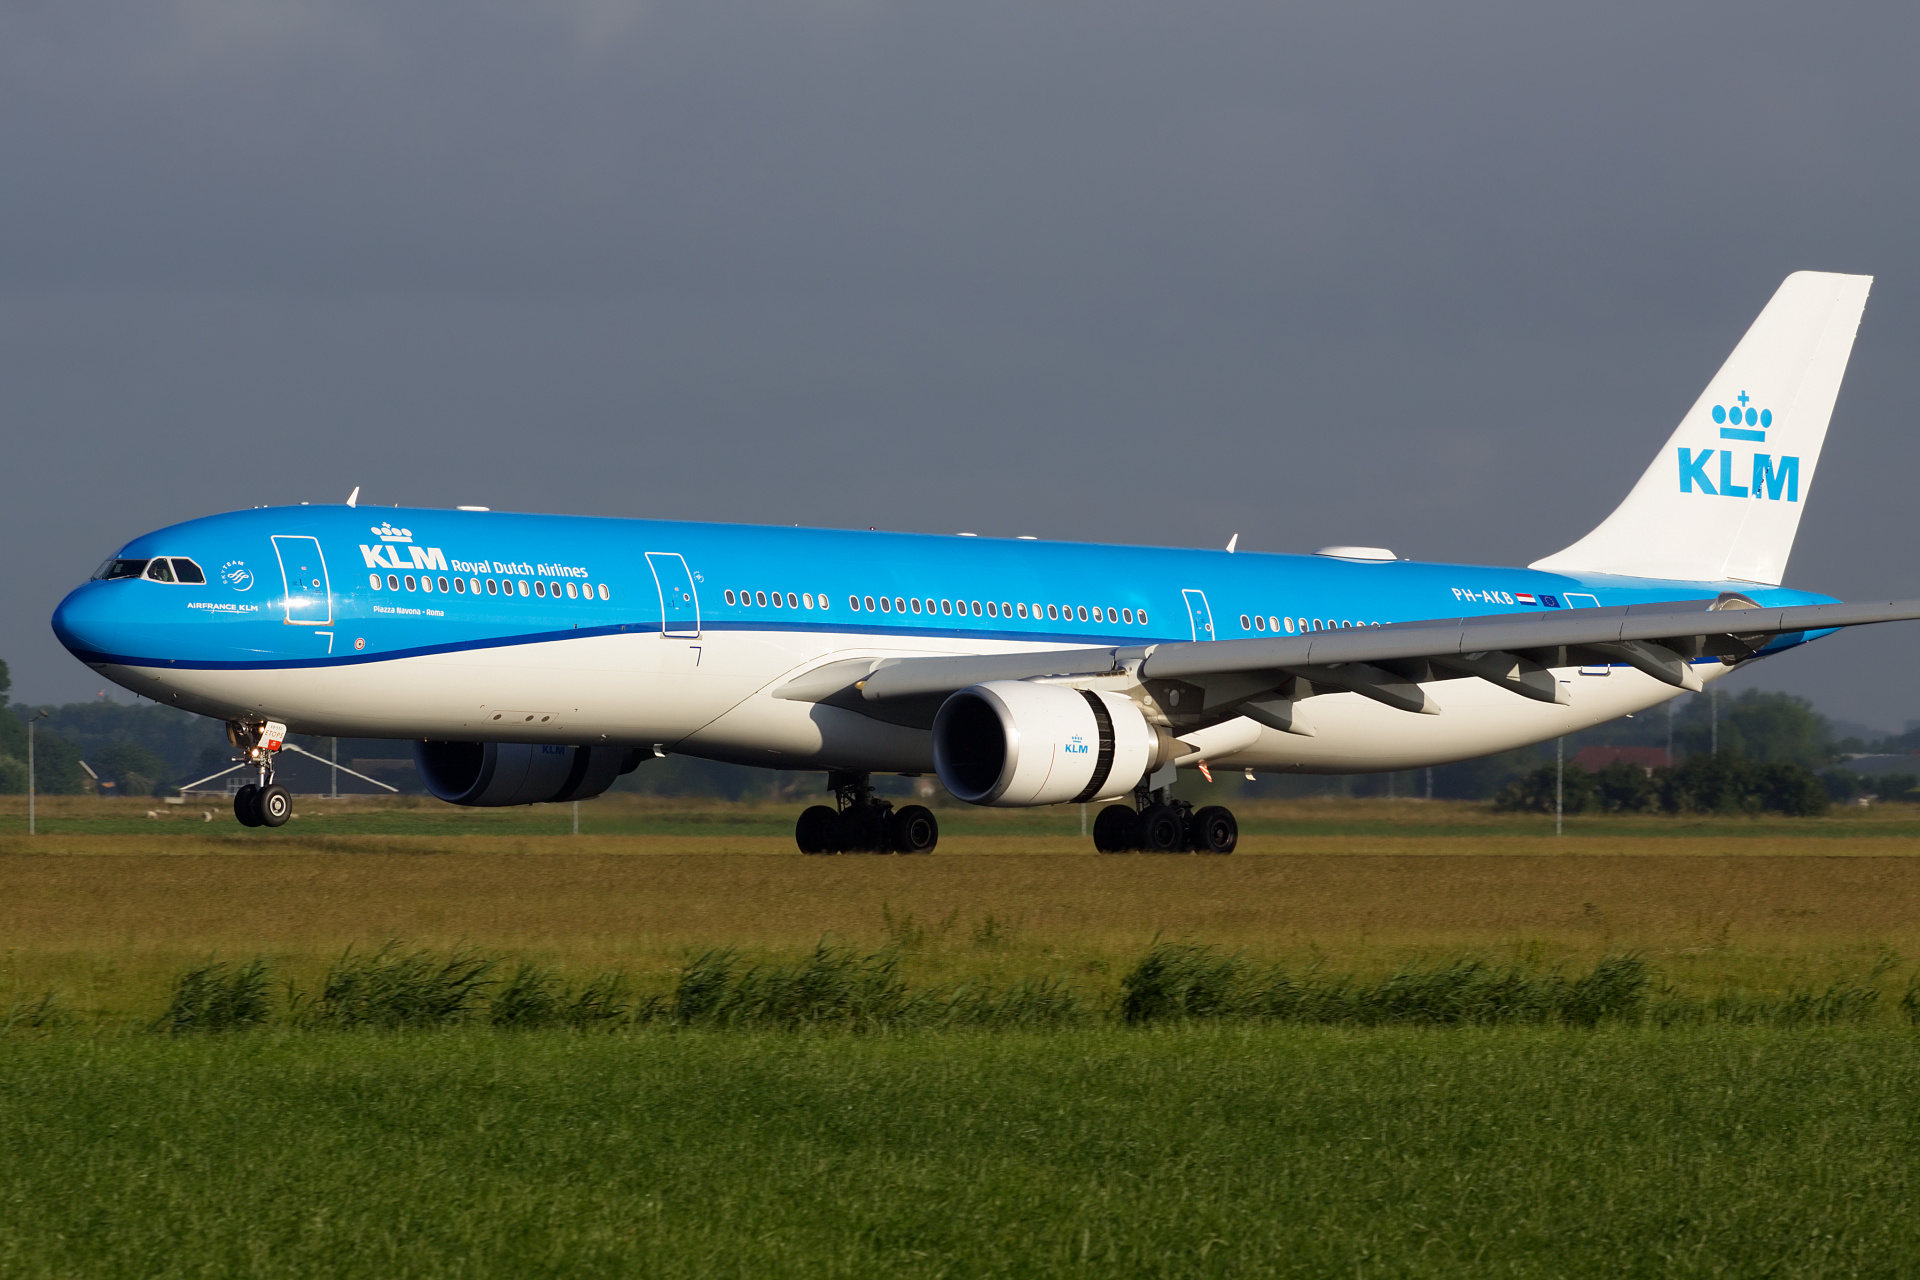 PH-AKB (nowe malowanie) (Samoloty » Spotting na Schiphol » Airbus A330-300 » KLM Royal Dutch Airlines)